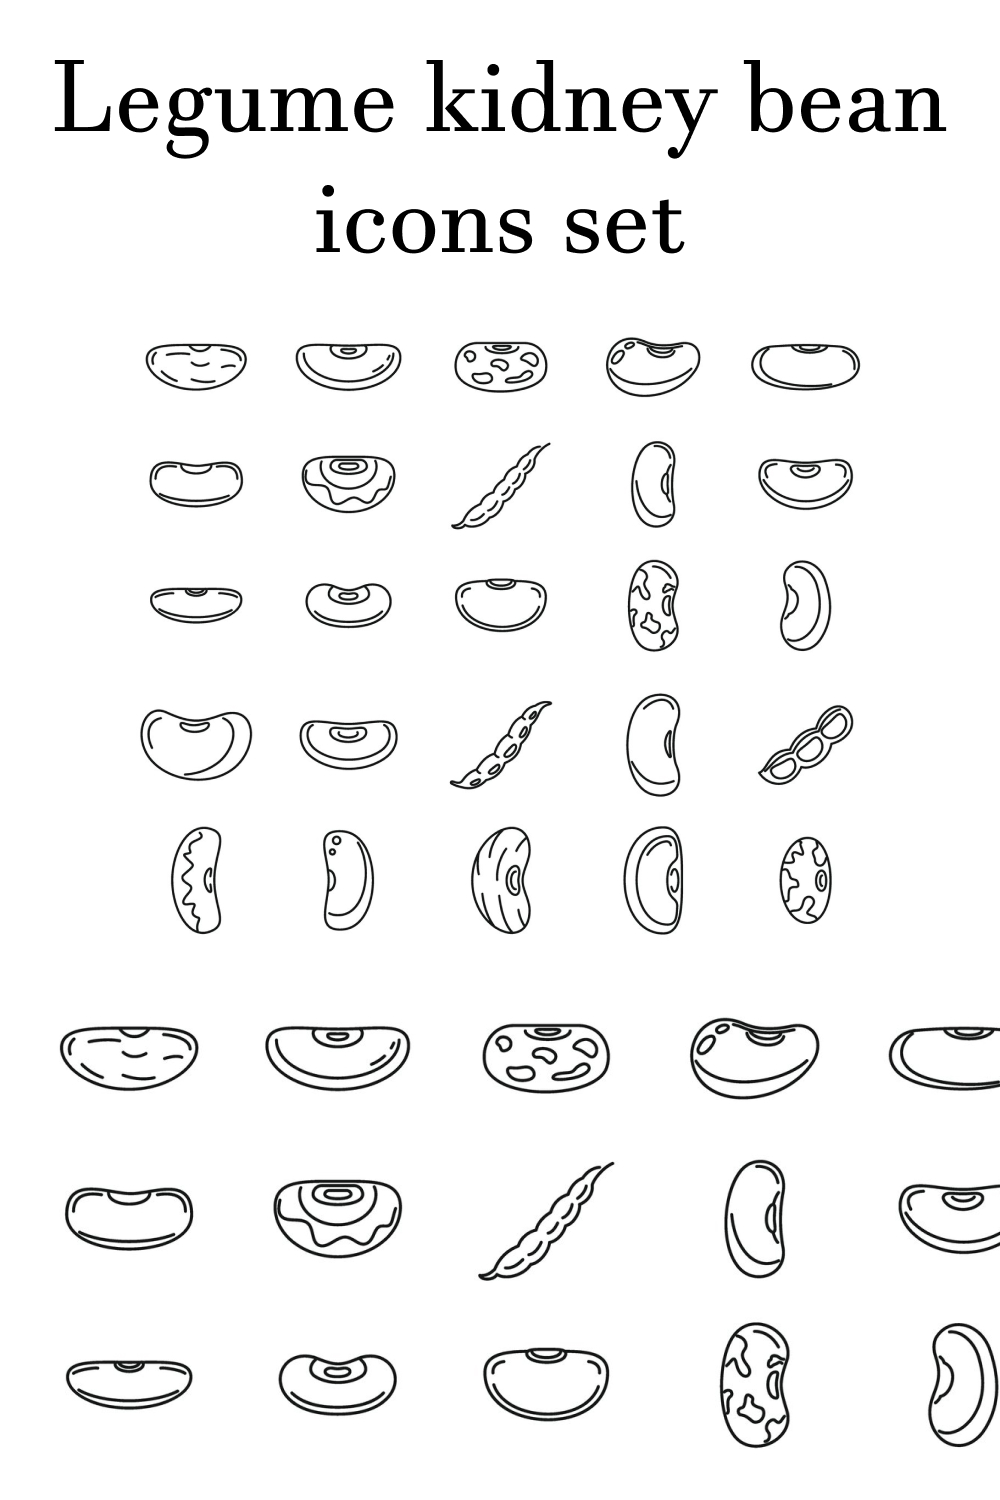 Images legume kidney bean icons set images of pinterest.